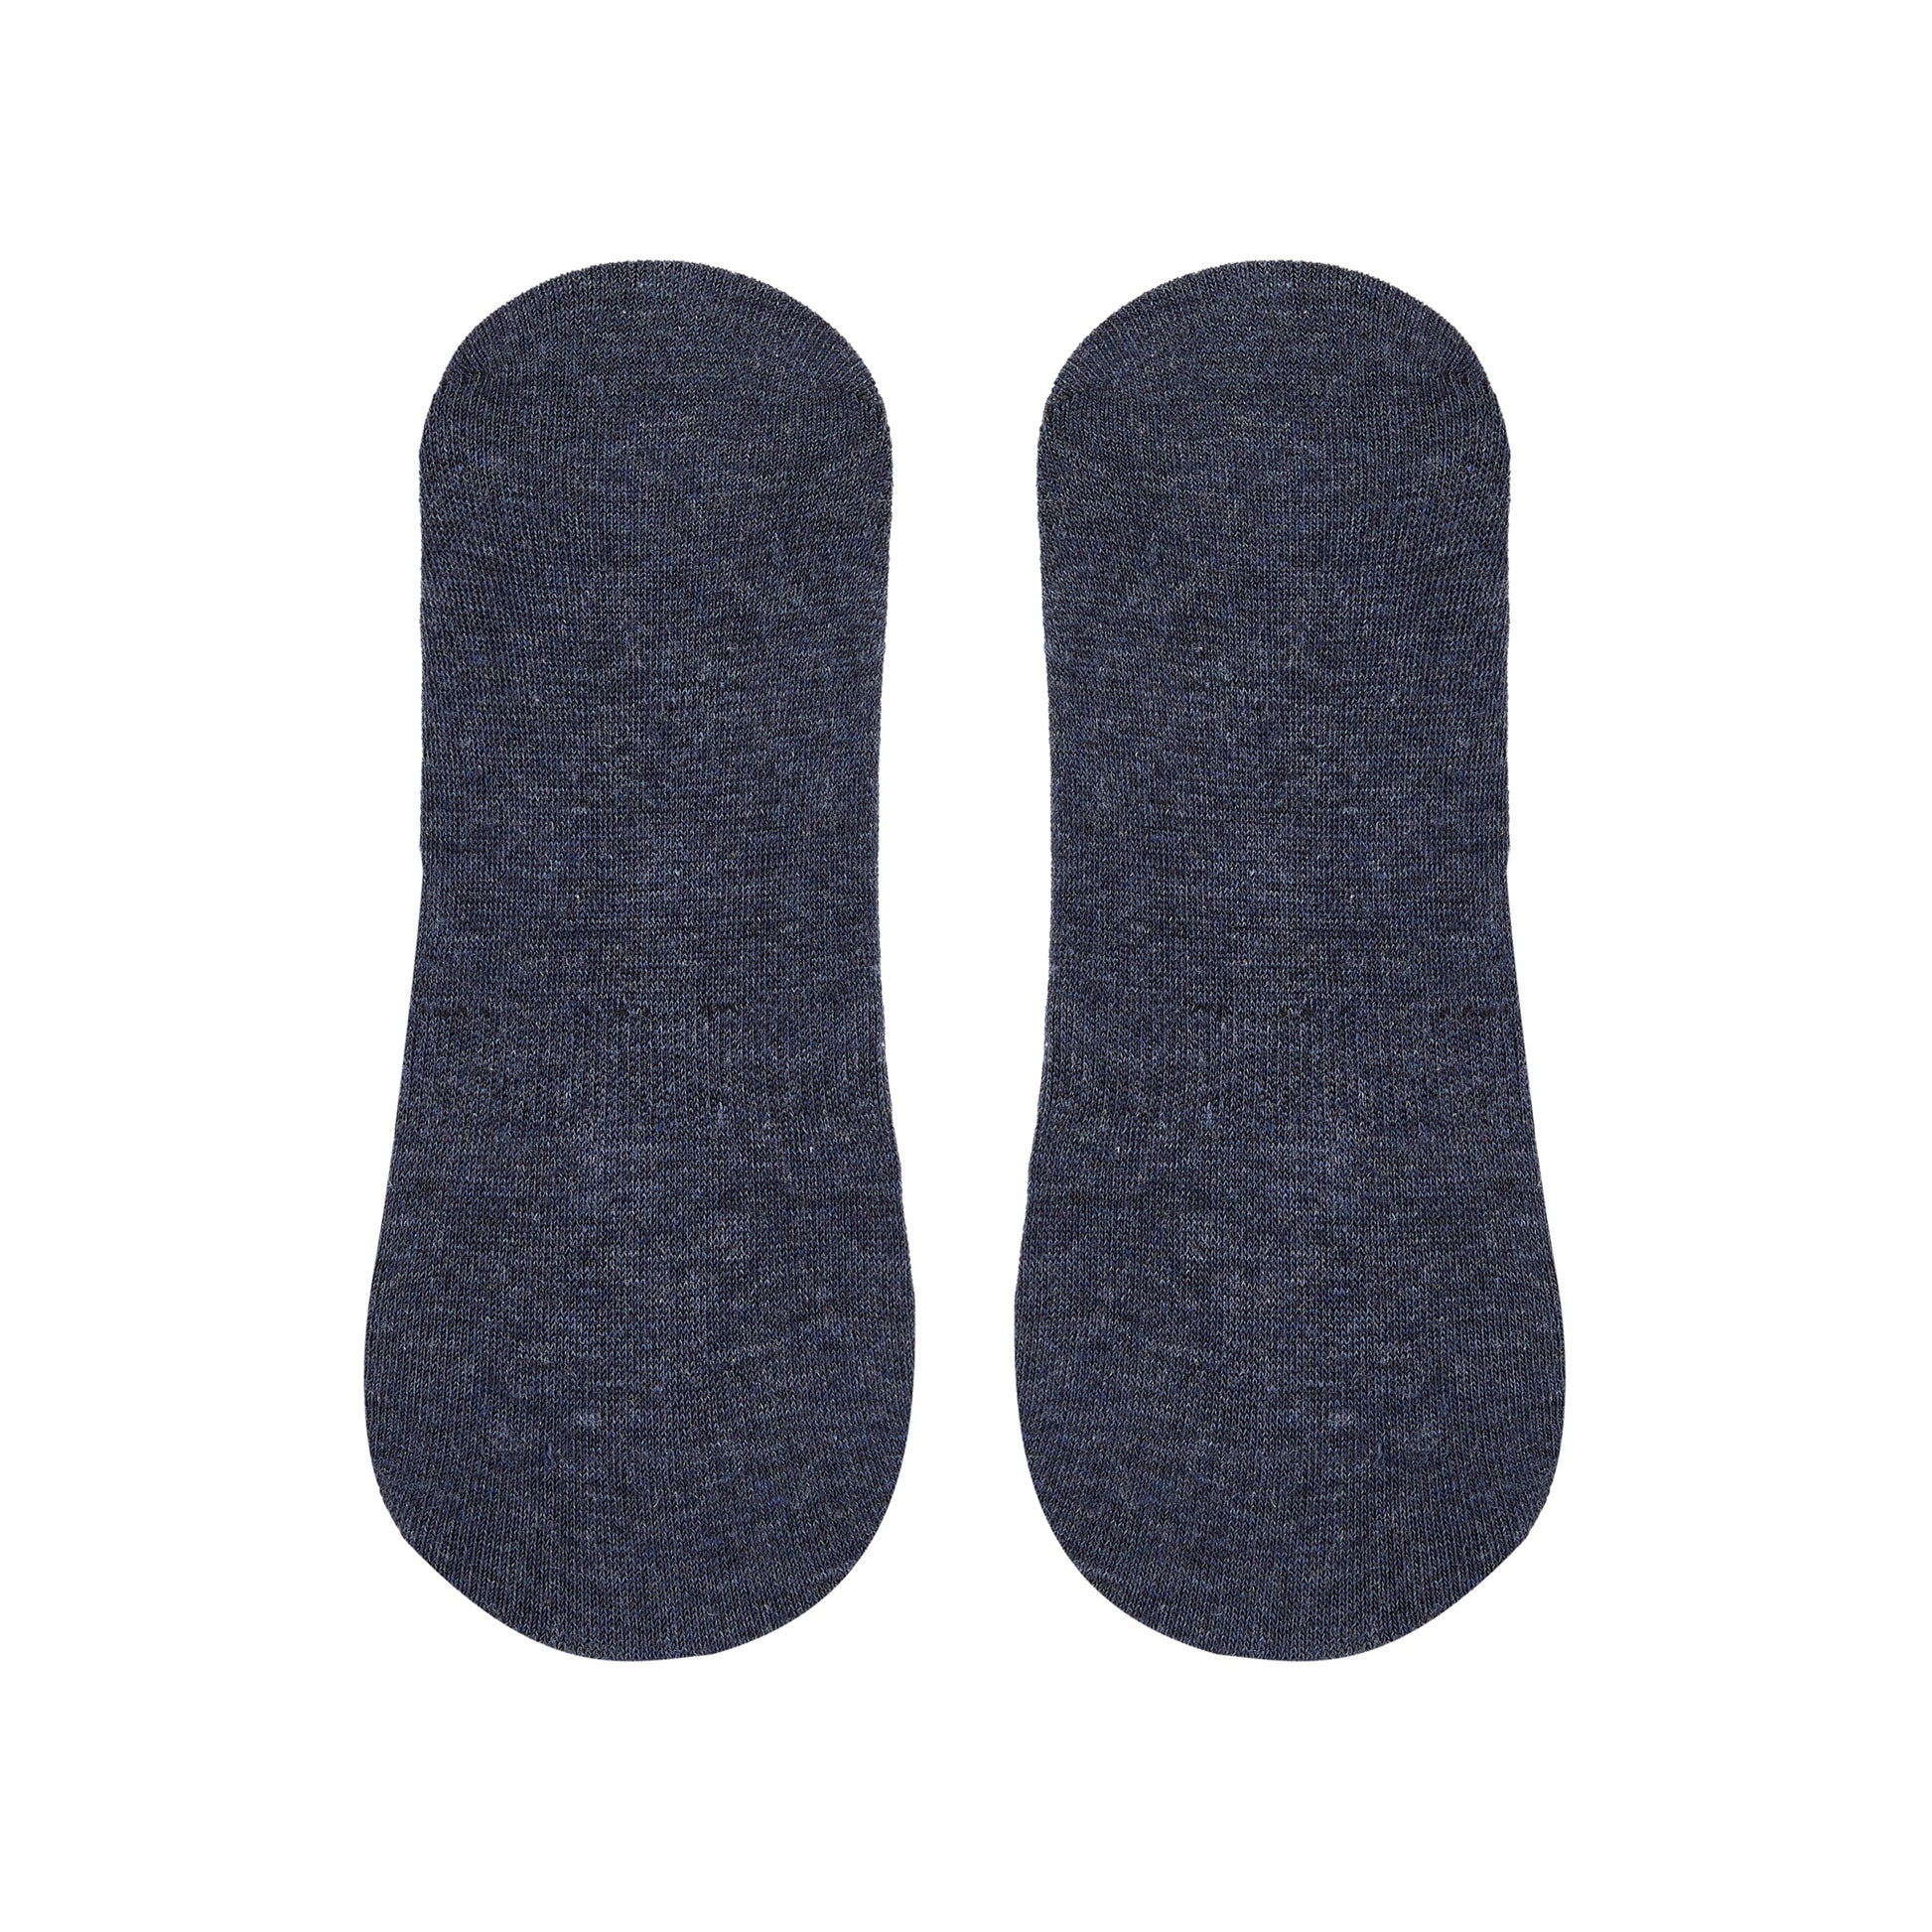 Women's Plain Colored Invisible Boat Socks - IDENTITY Apparel Shop